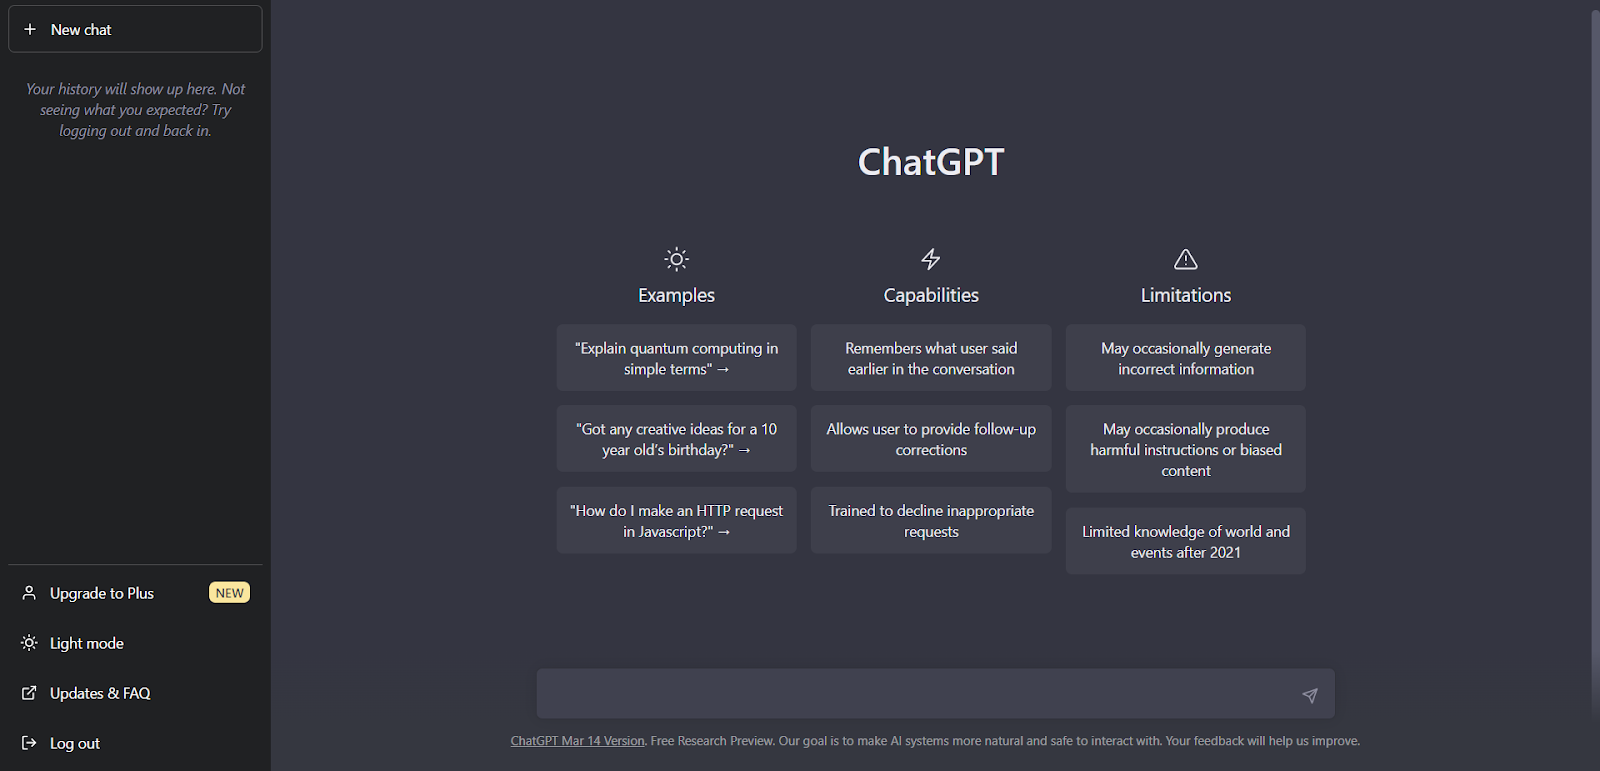 ferramentas de inteligência artificial: ChatGPT